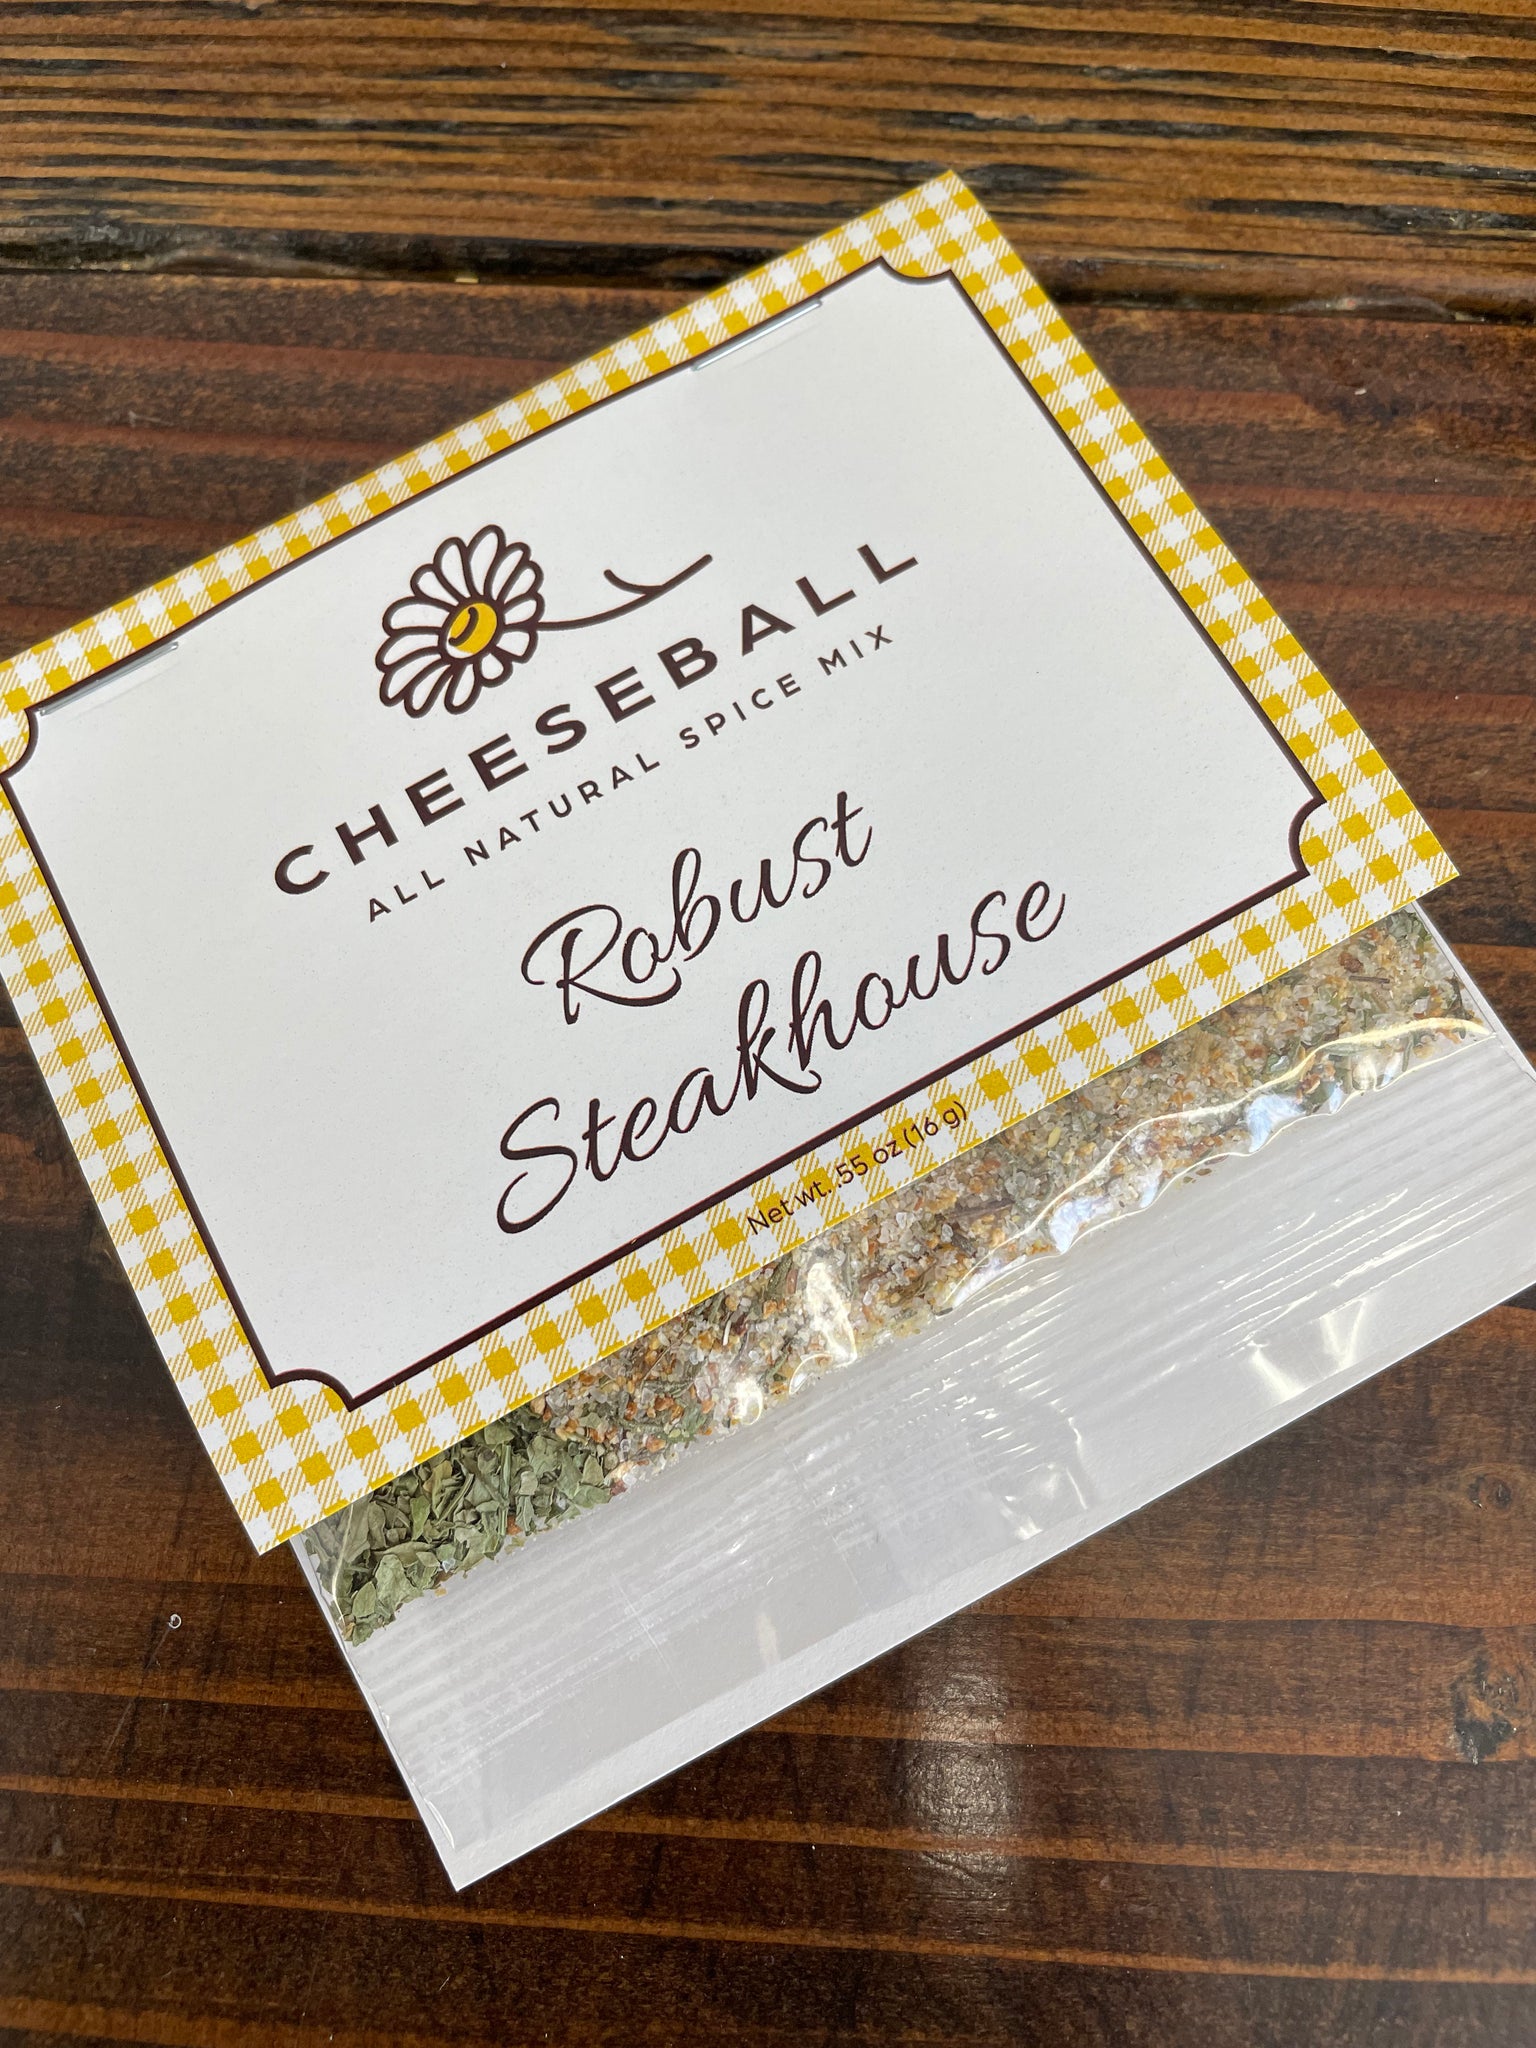 Cheeseball-Robust Steakhouse